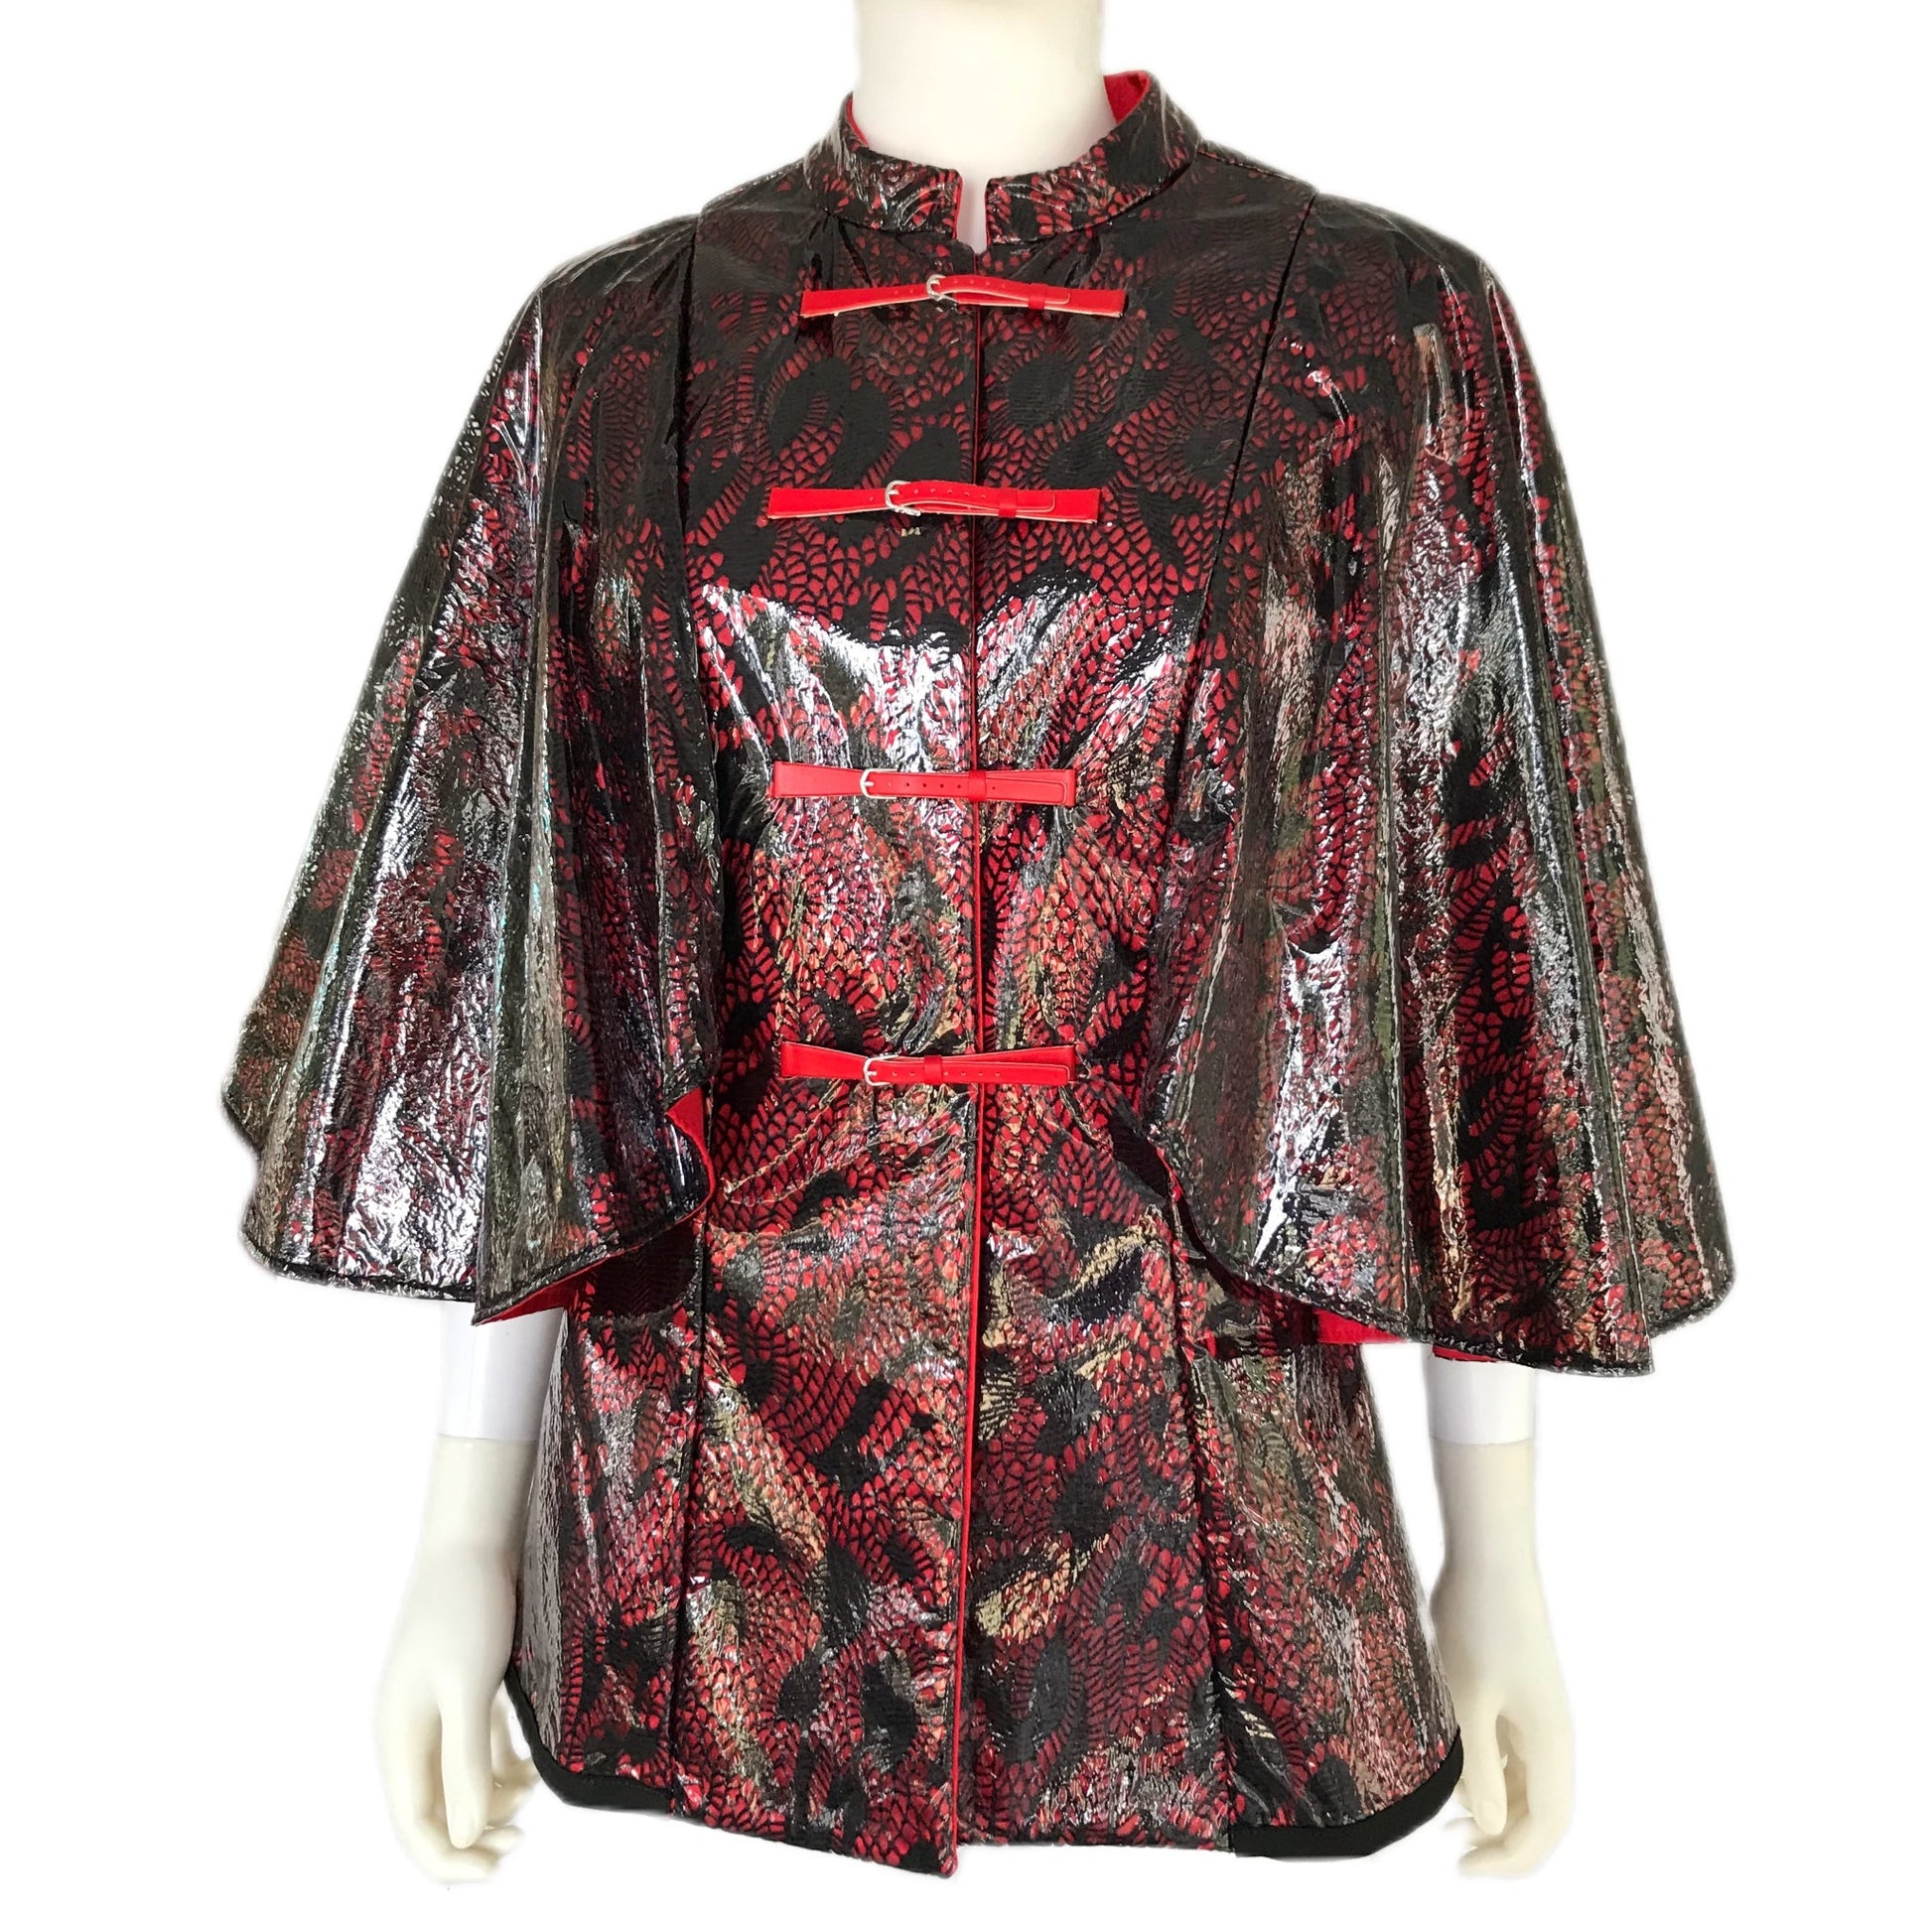 Women's Capelet Style Rain Jacket in Laminated Lace - Size Medium